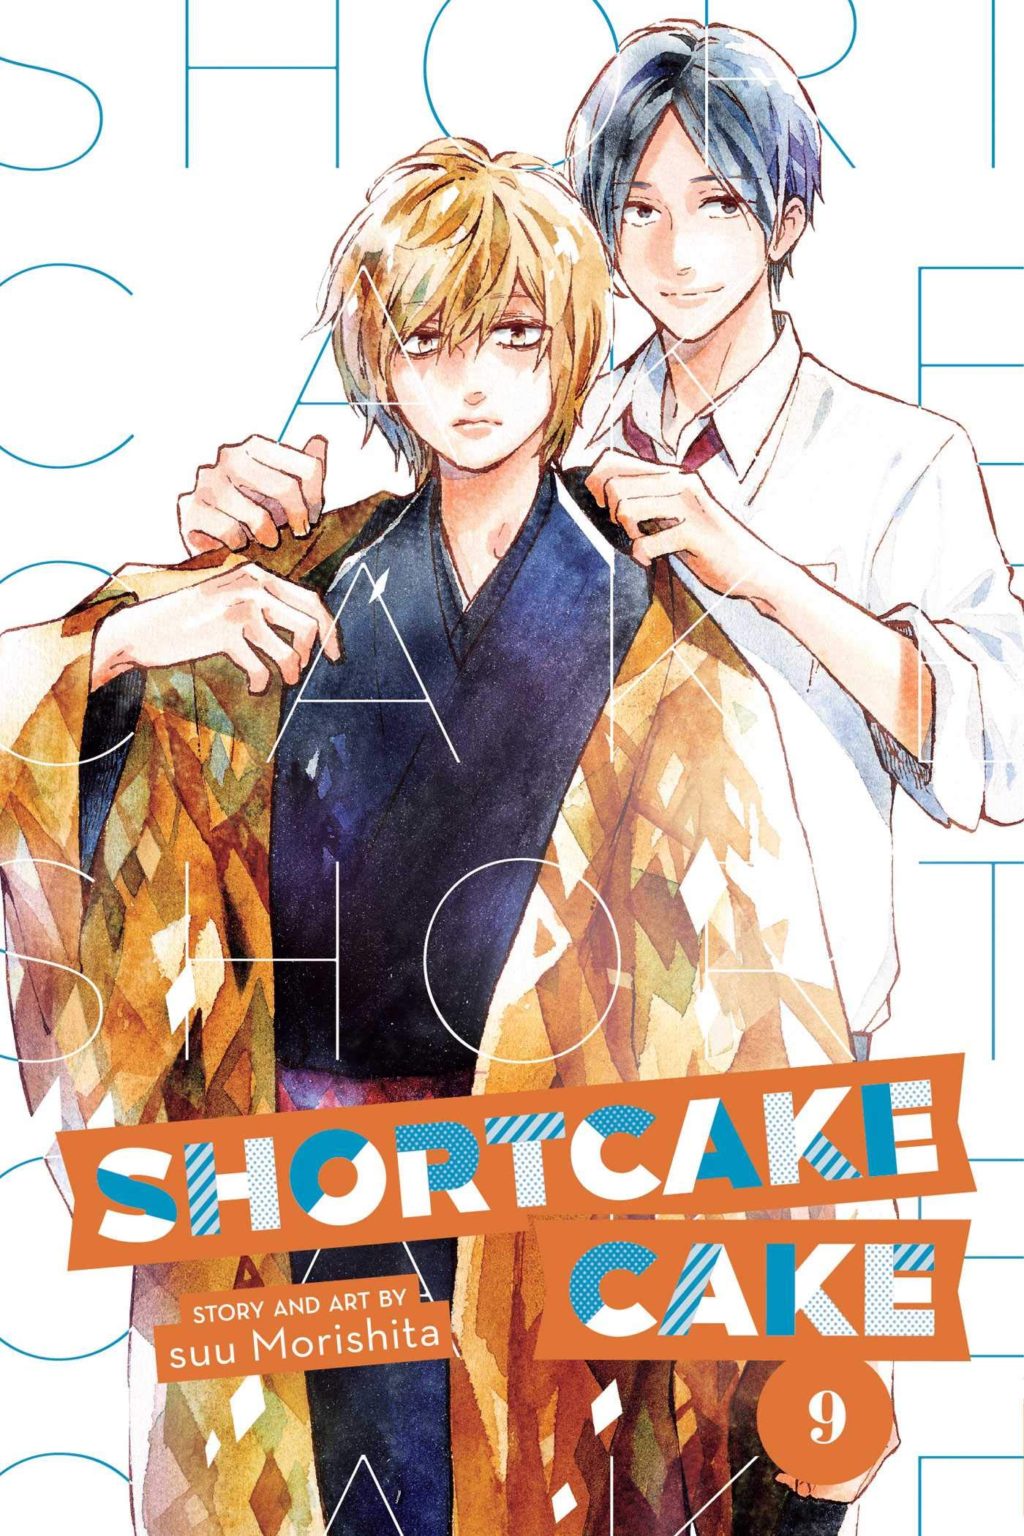 Shortcake Cake Volume 9